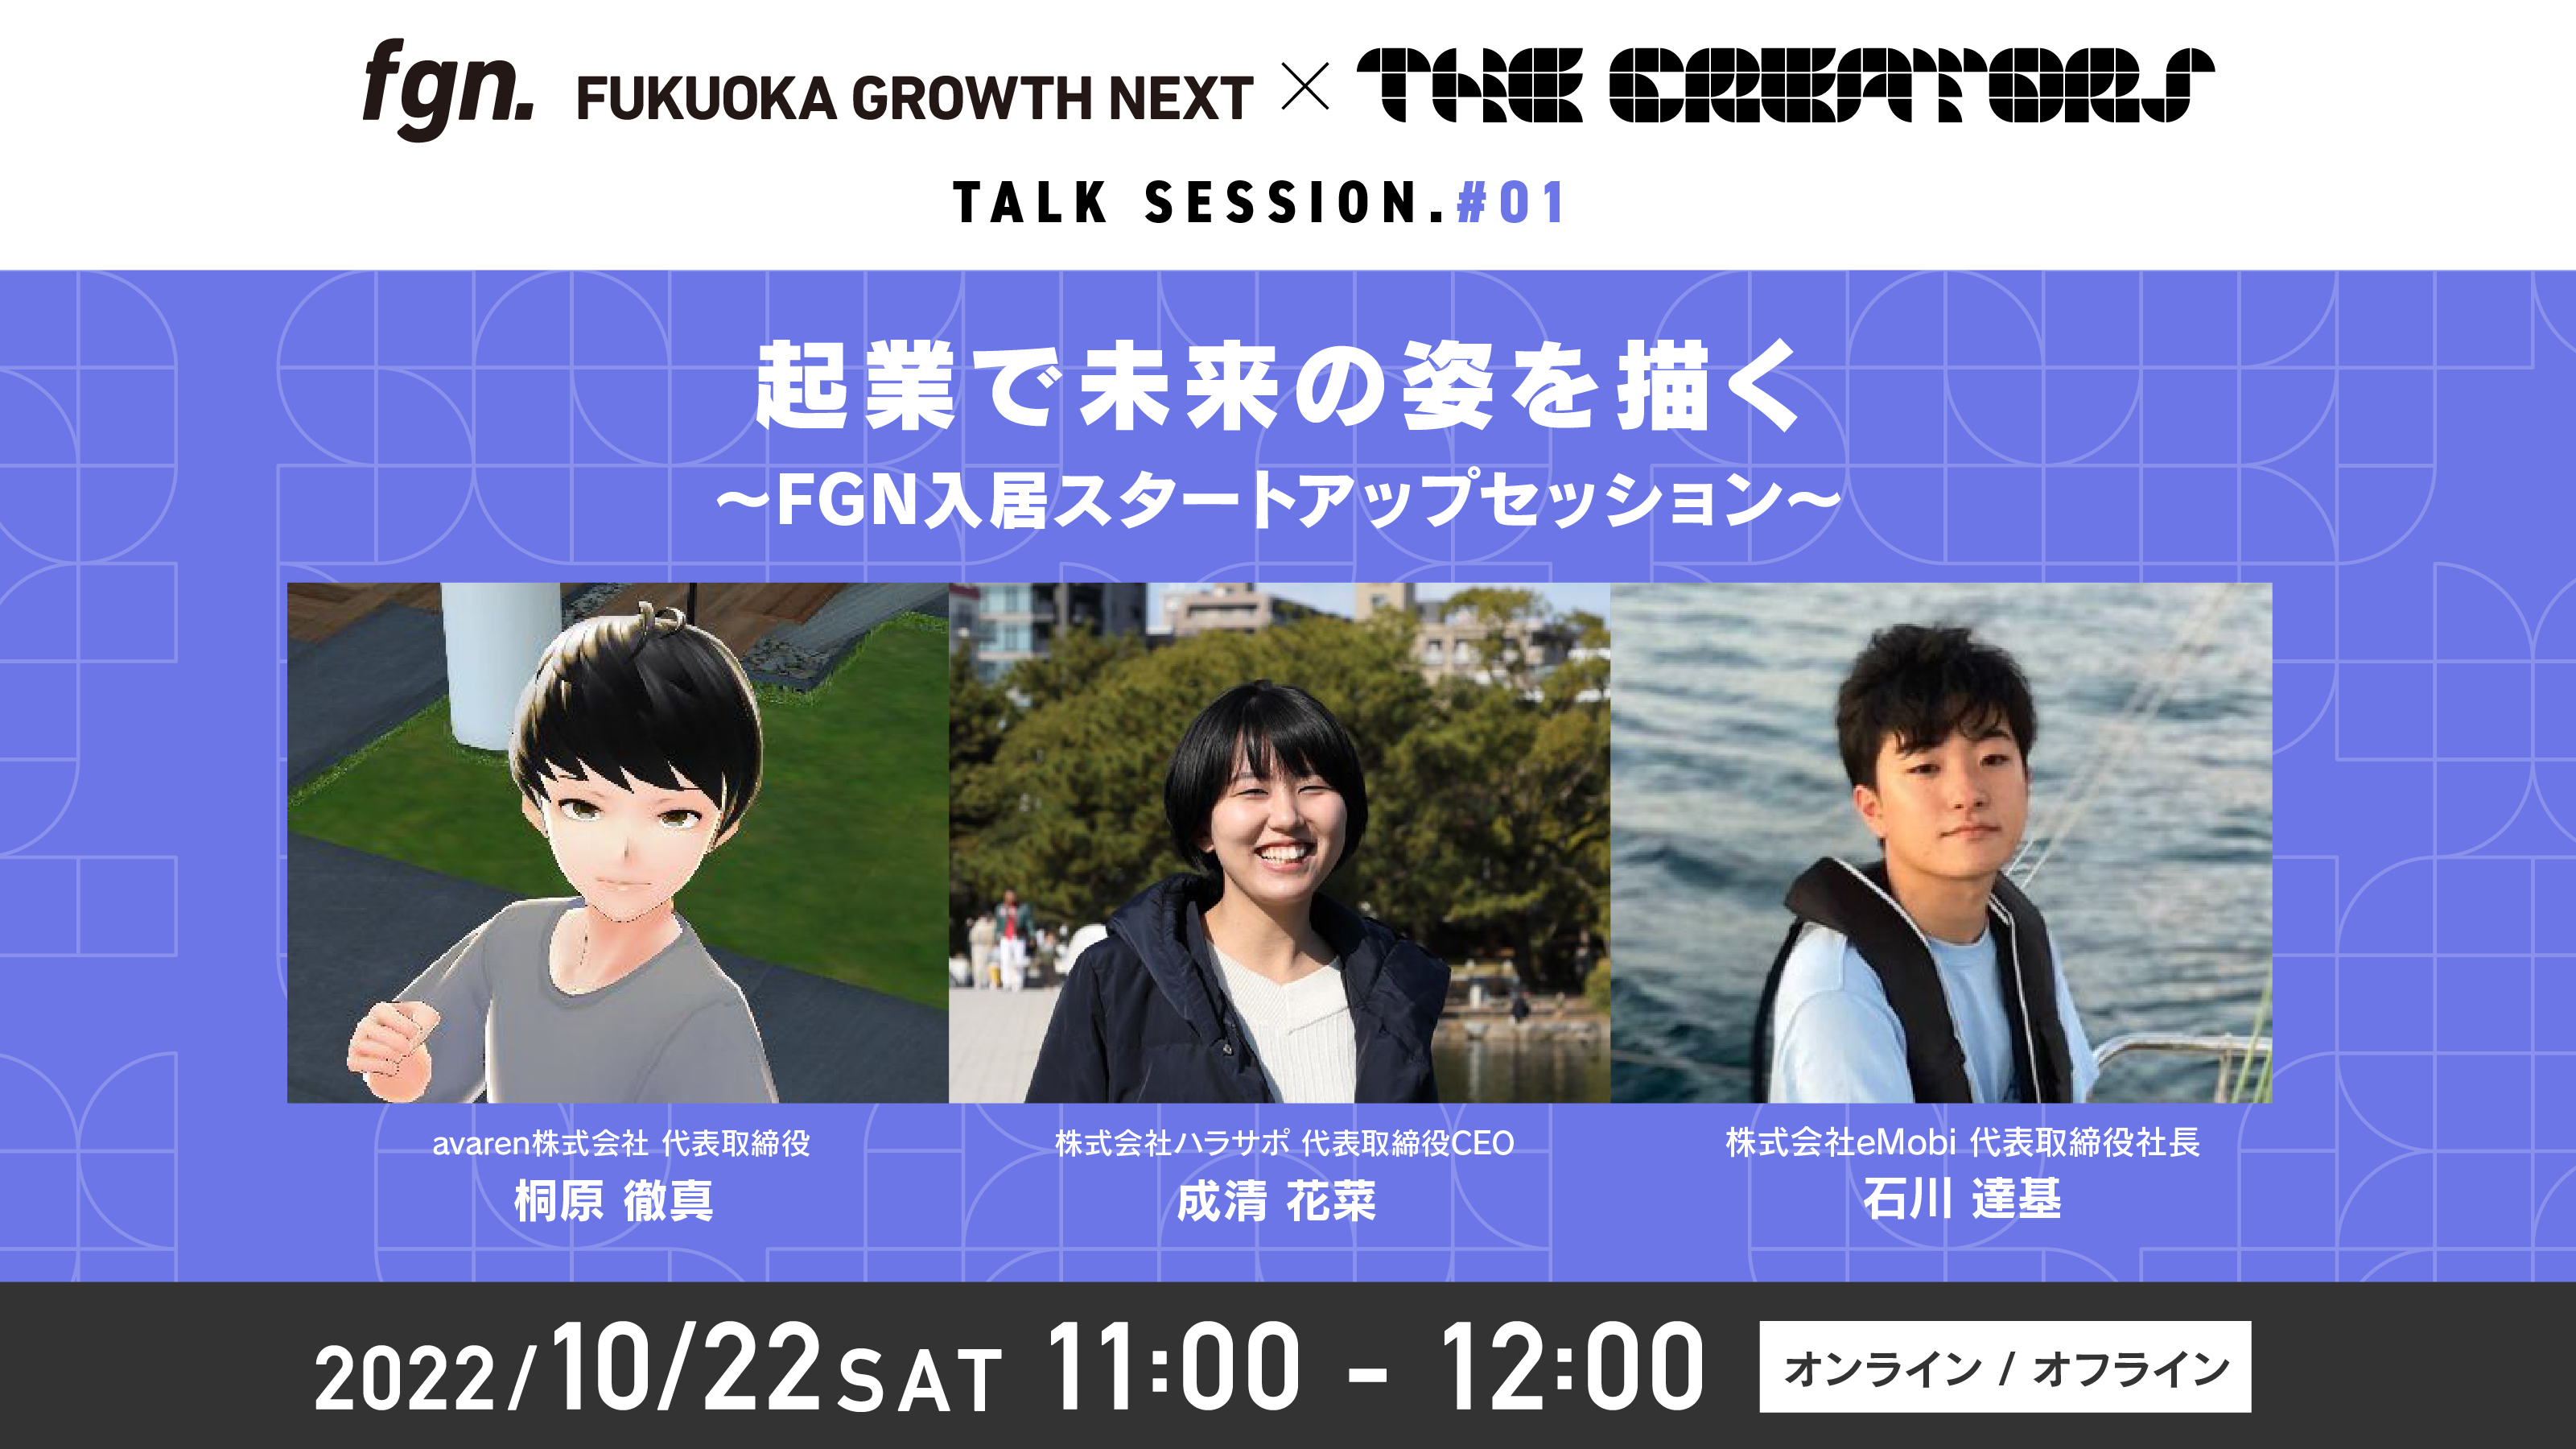 Fukuoka Growth Next × The Creators TALK SESSION #01